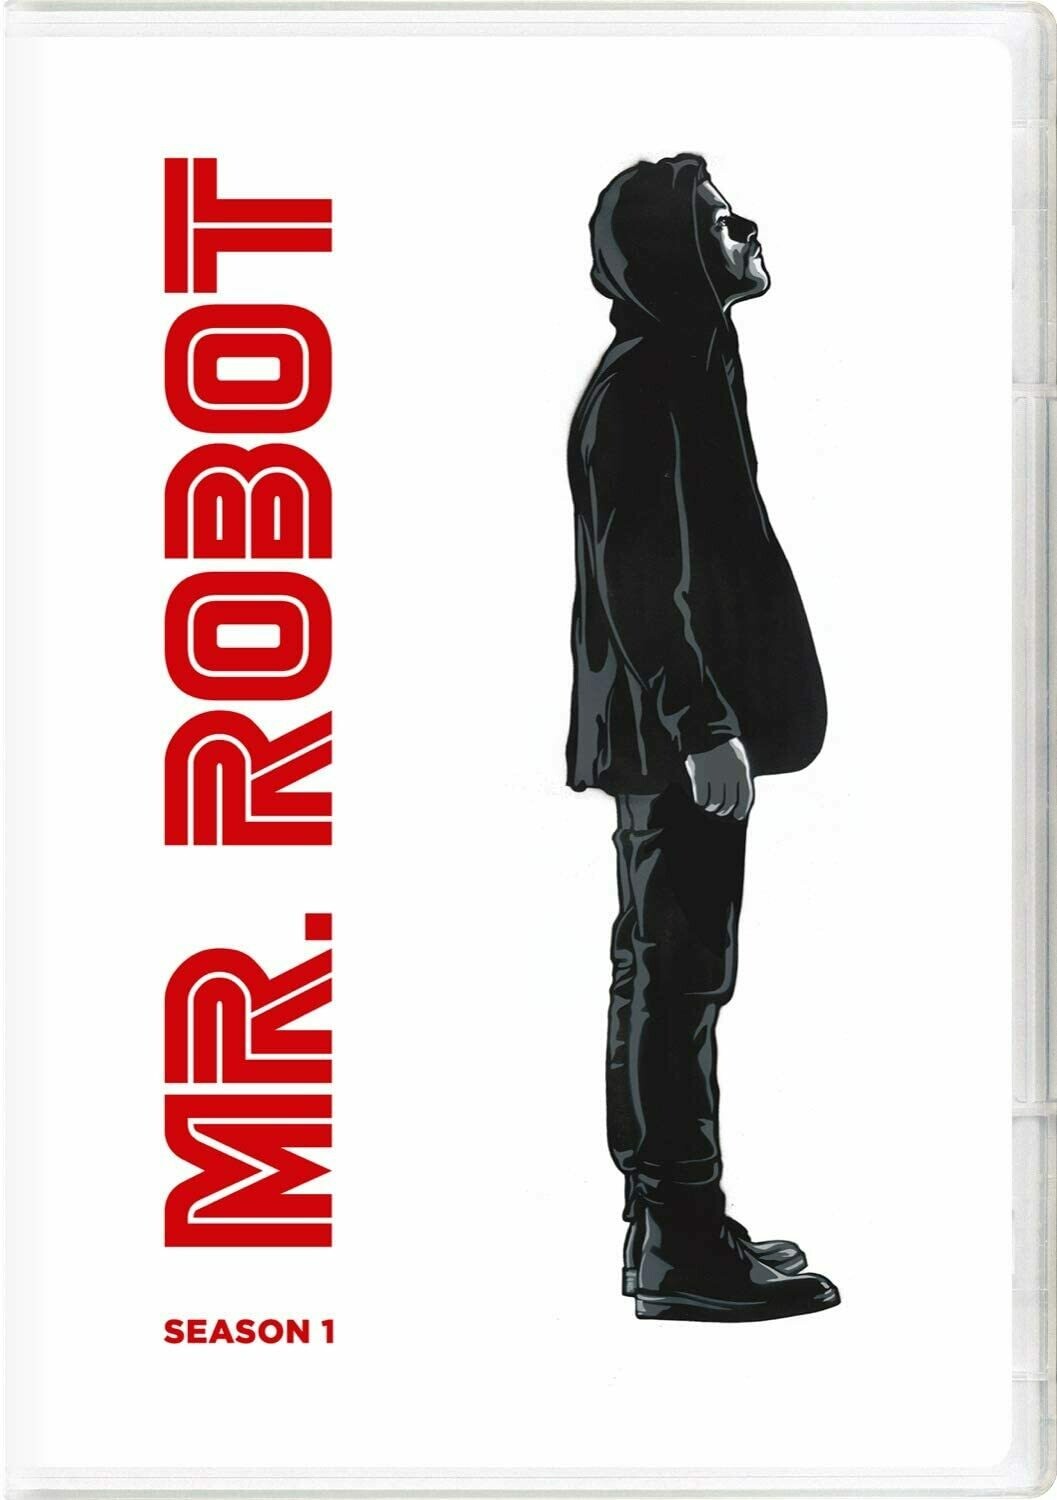 Mr. Robot Season One (7 day rental)